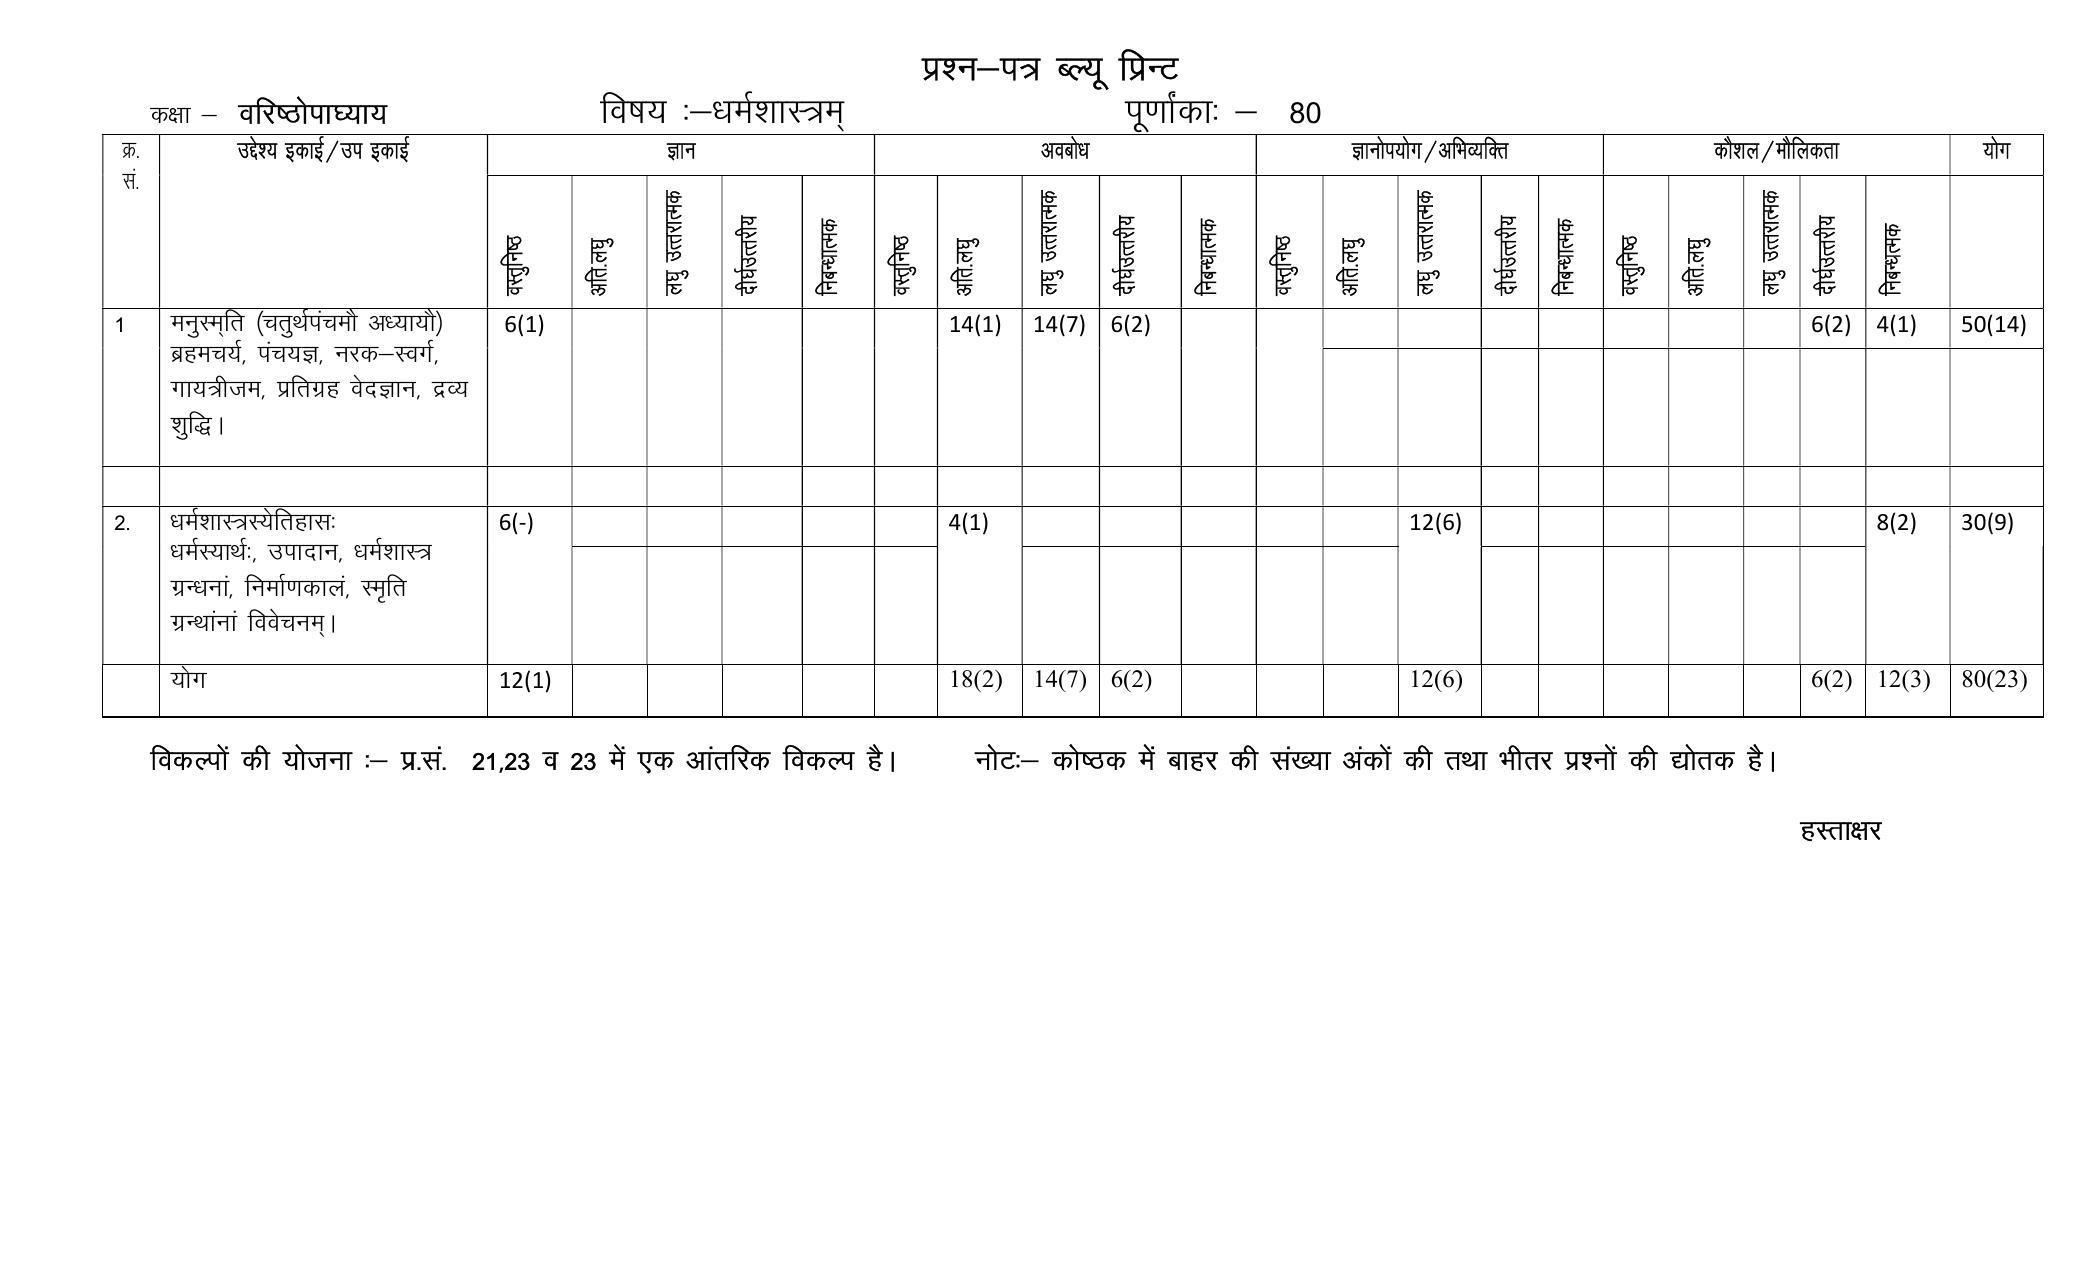 RBSE 2023 DHARAM SHASTRAM Varishtha Upadhyay Paper - Page 2